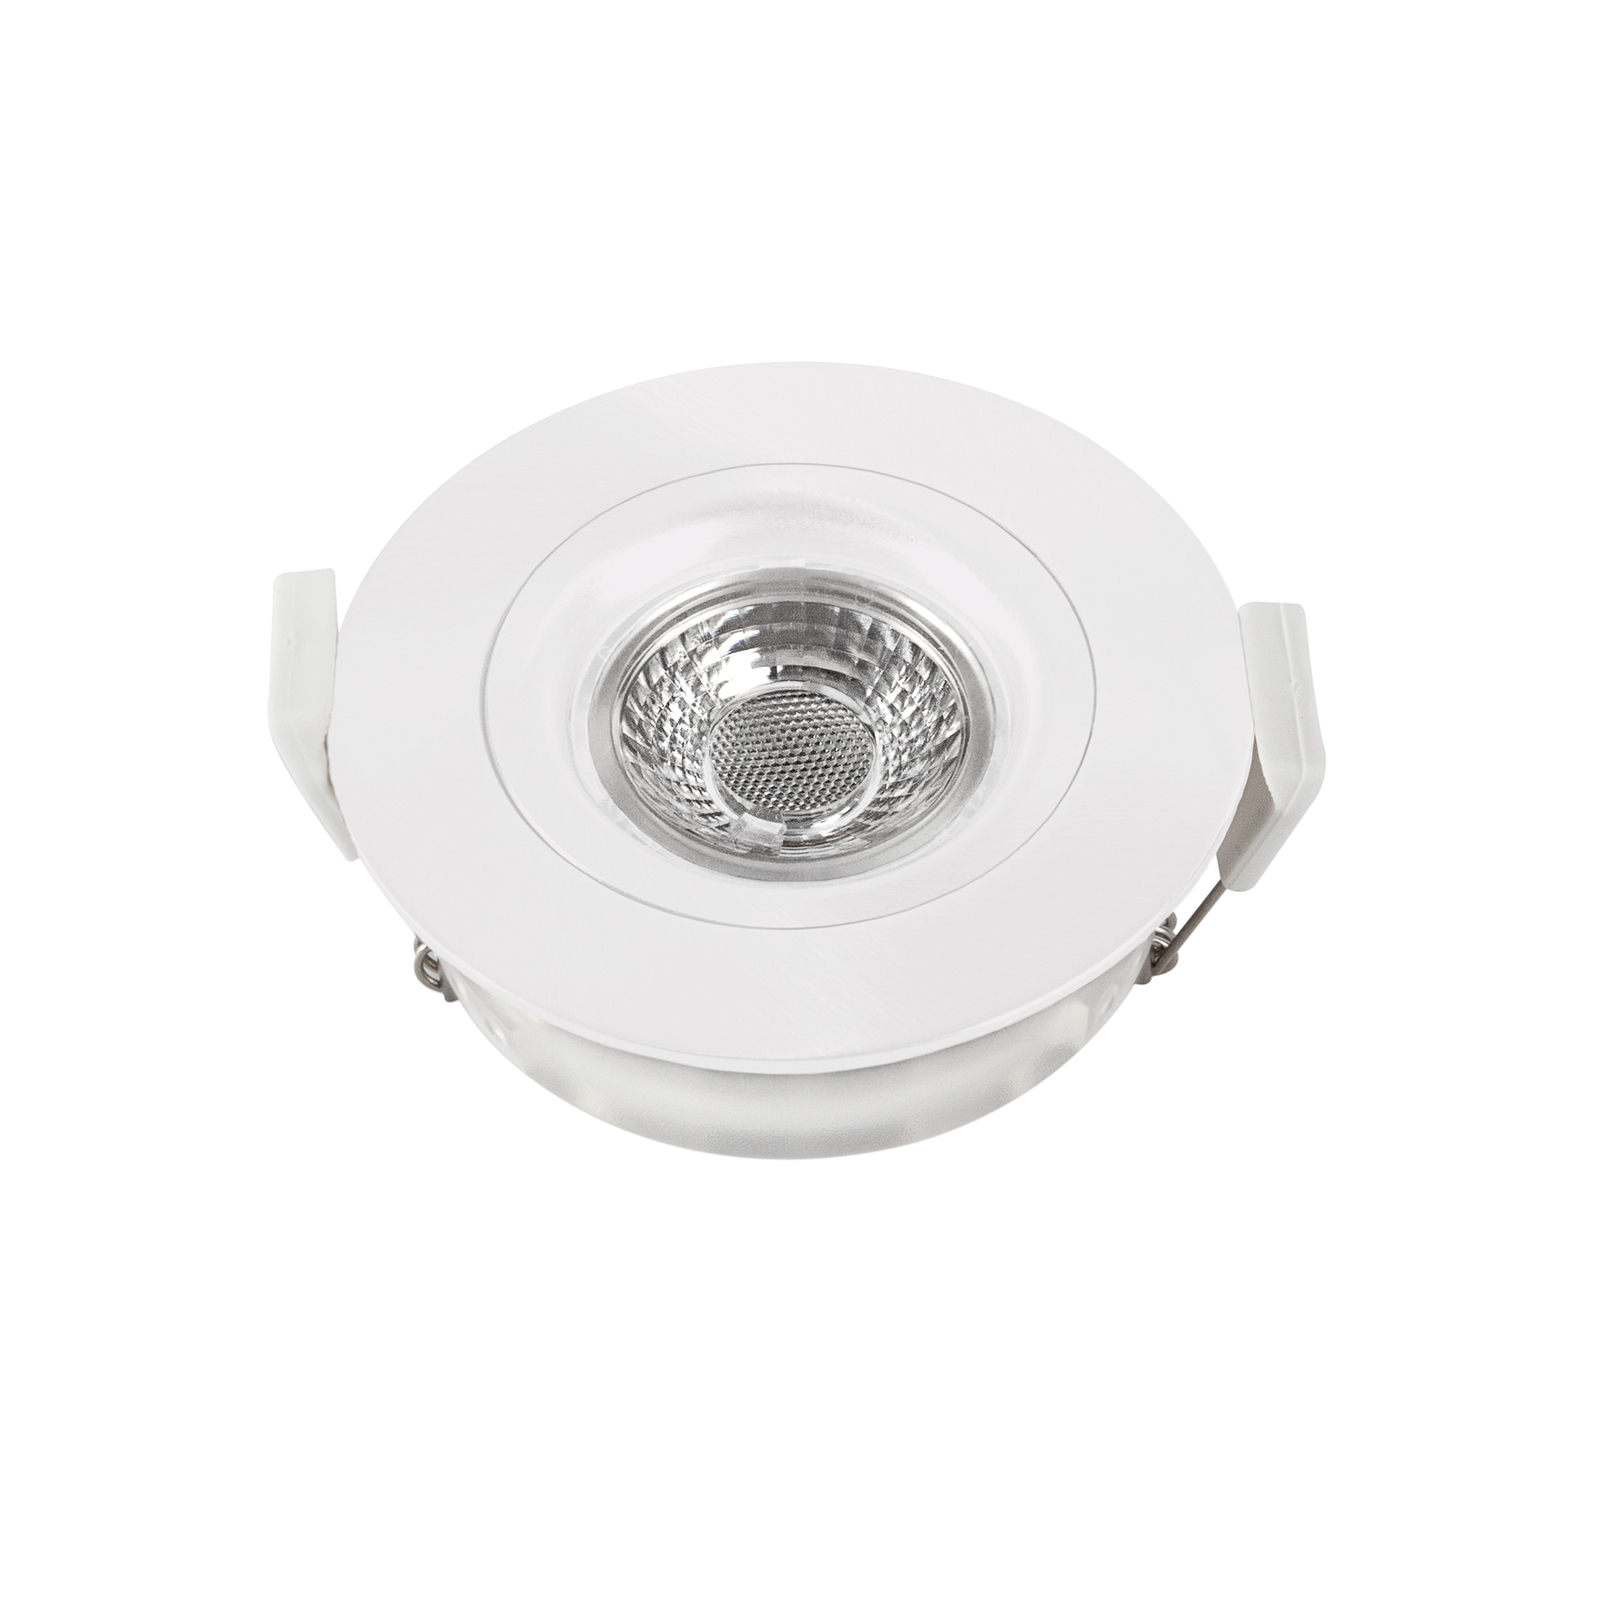 Faretto LED da incasso DL6809, rotondo, bianco